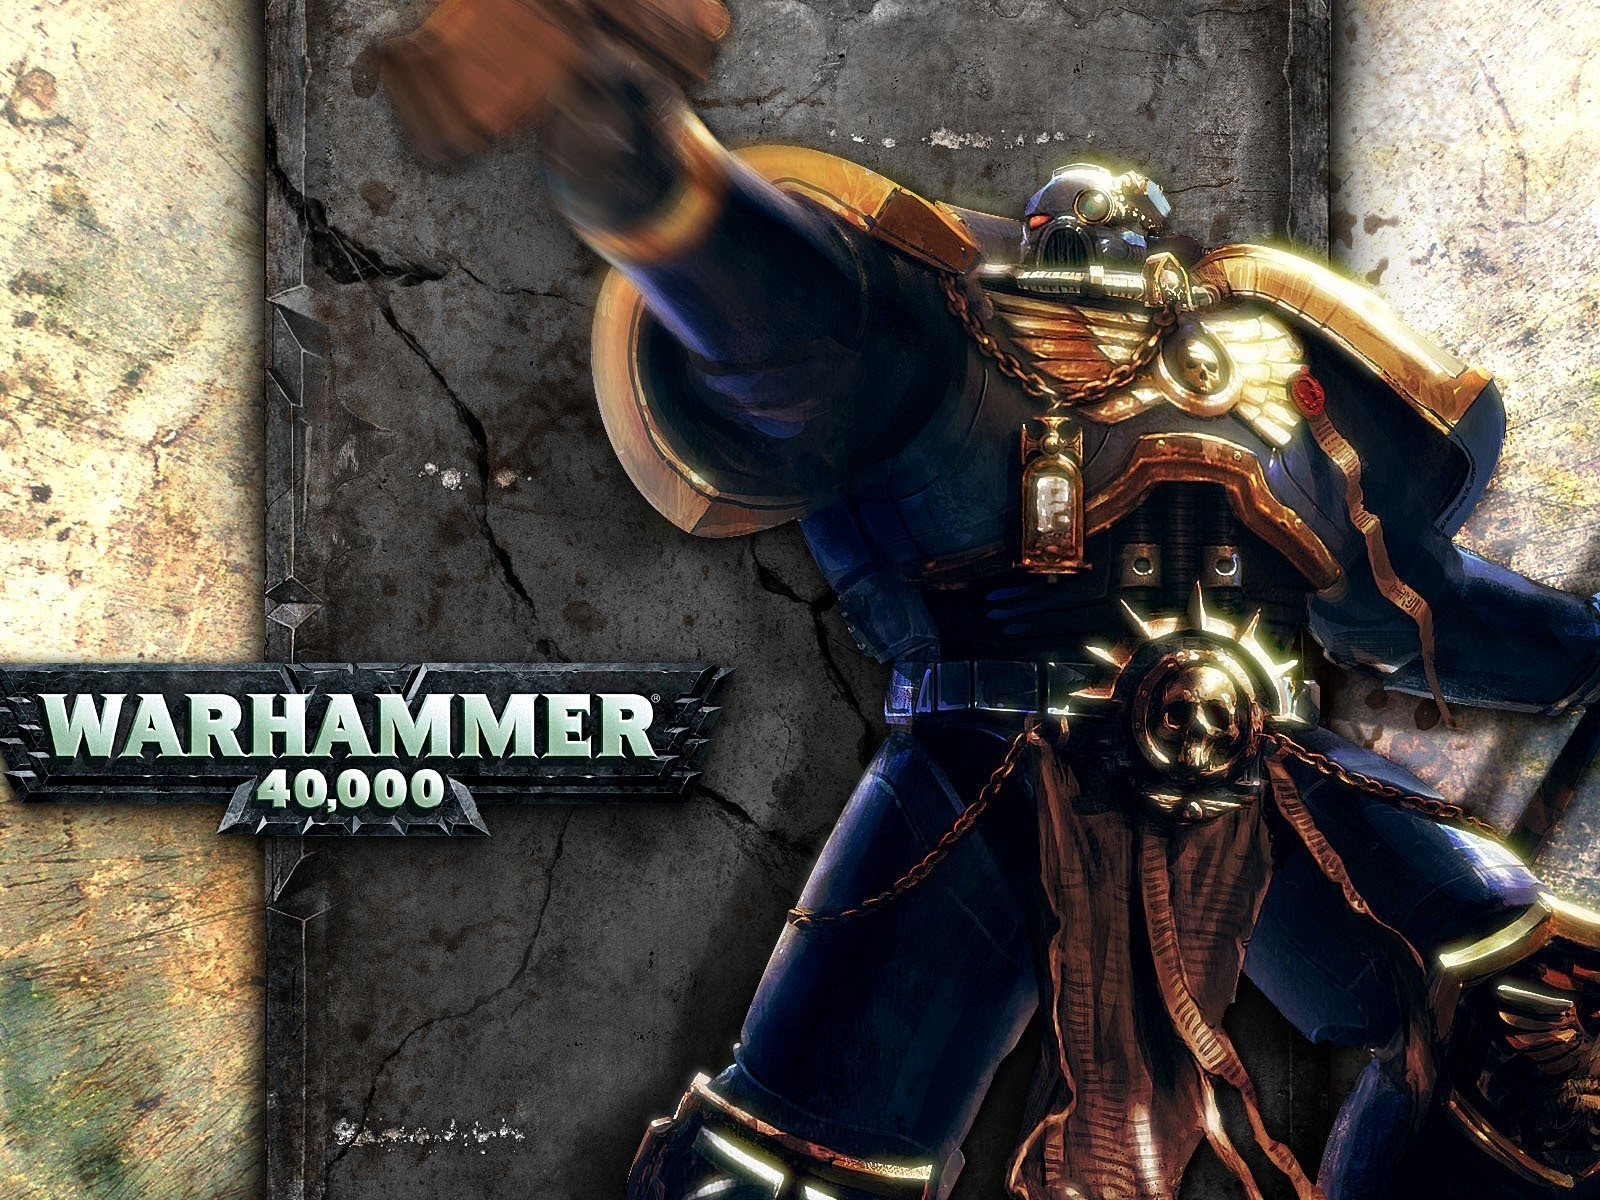 Warhammer 40k Poster for 1600 x 1200 resolution